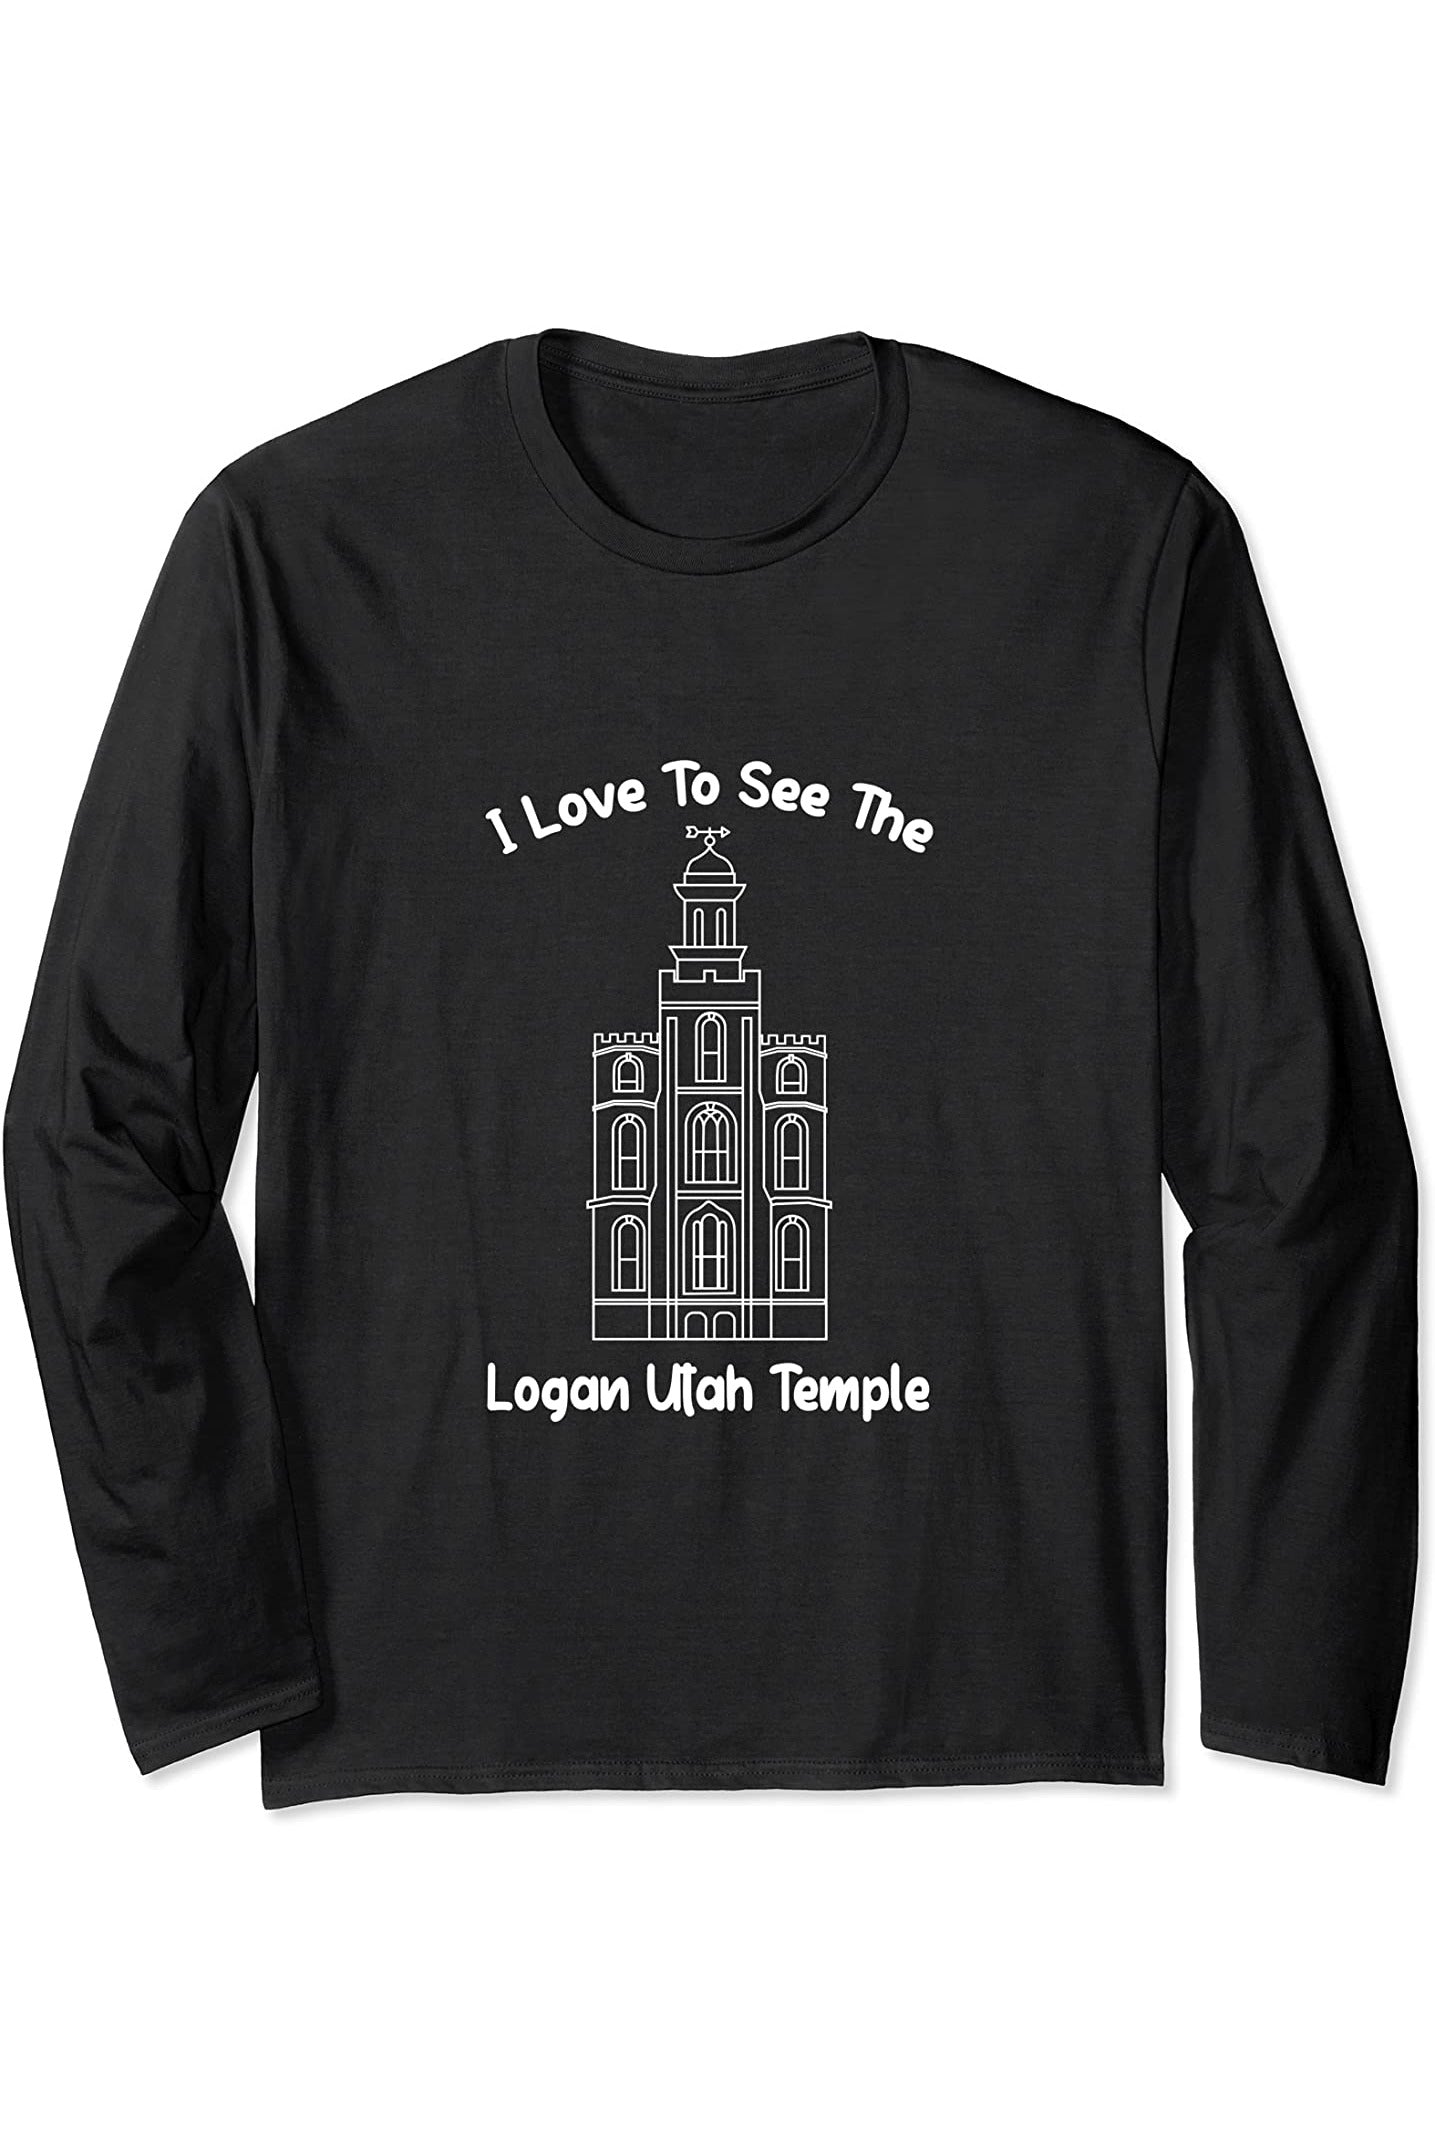 Logan Utah Temple Long Sleeve T-Shirt - Primary Style (English) US